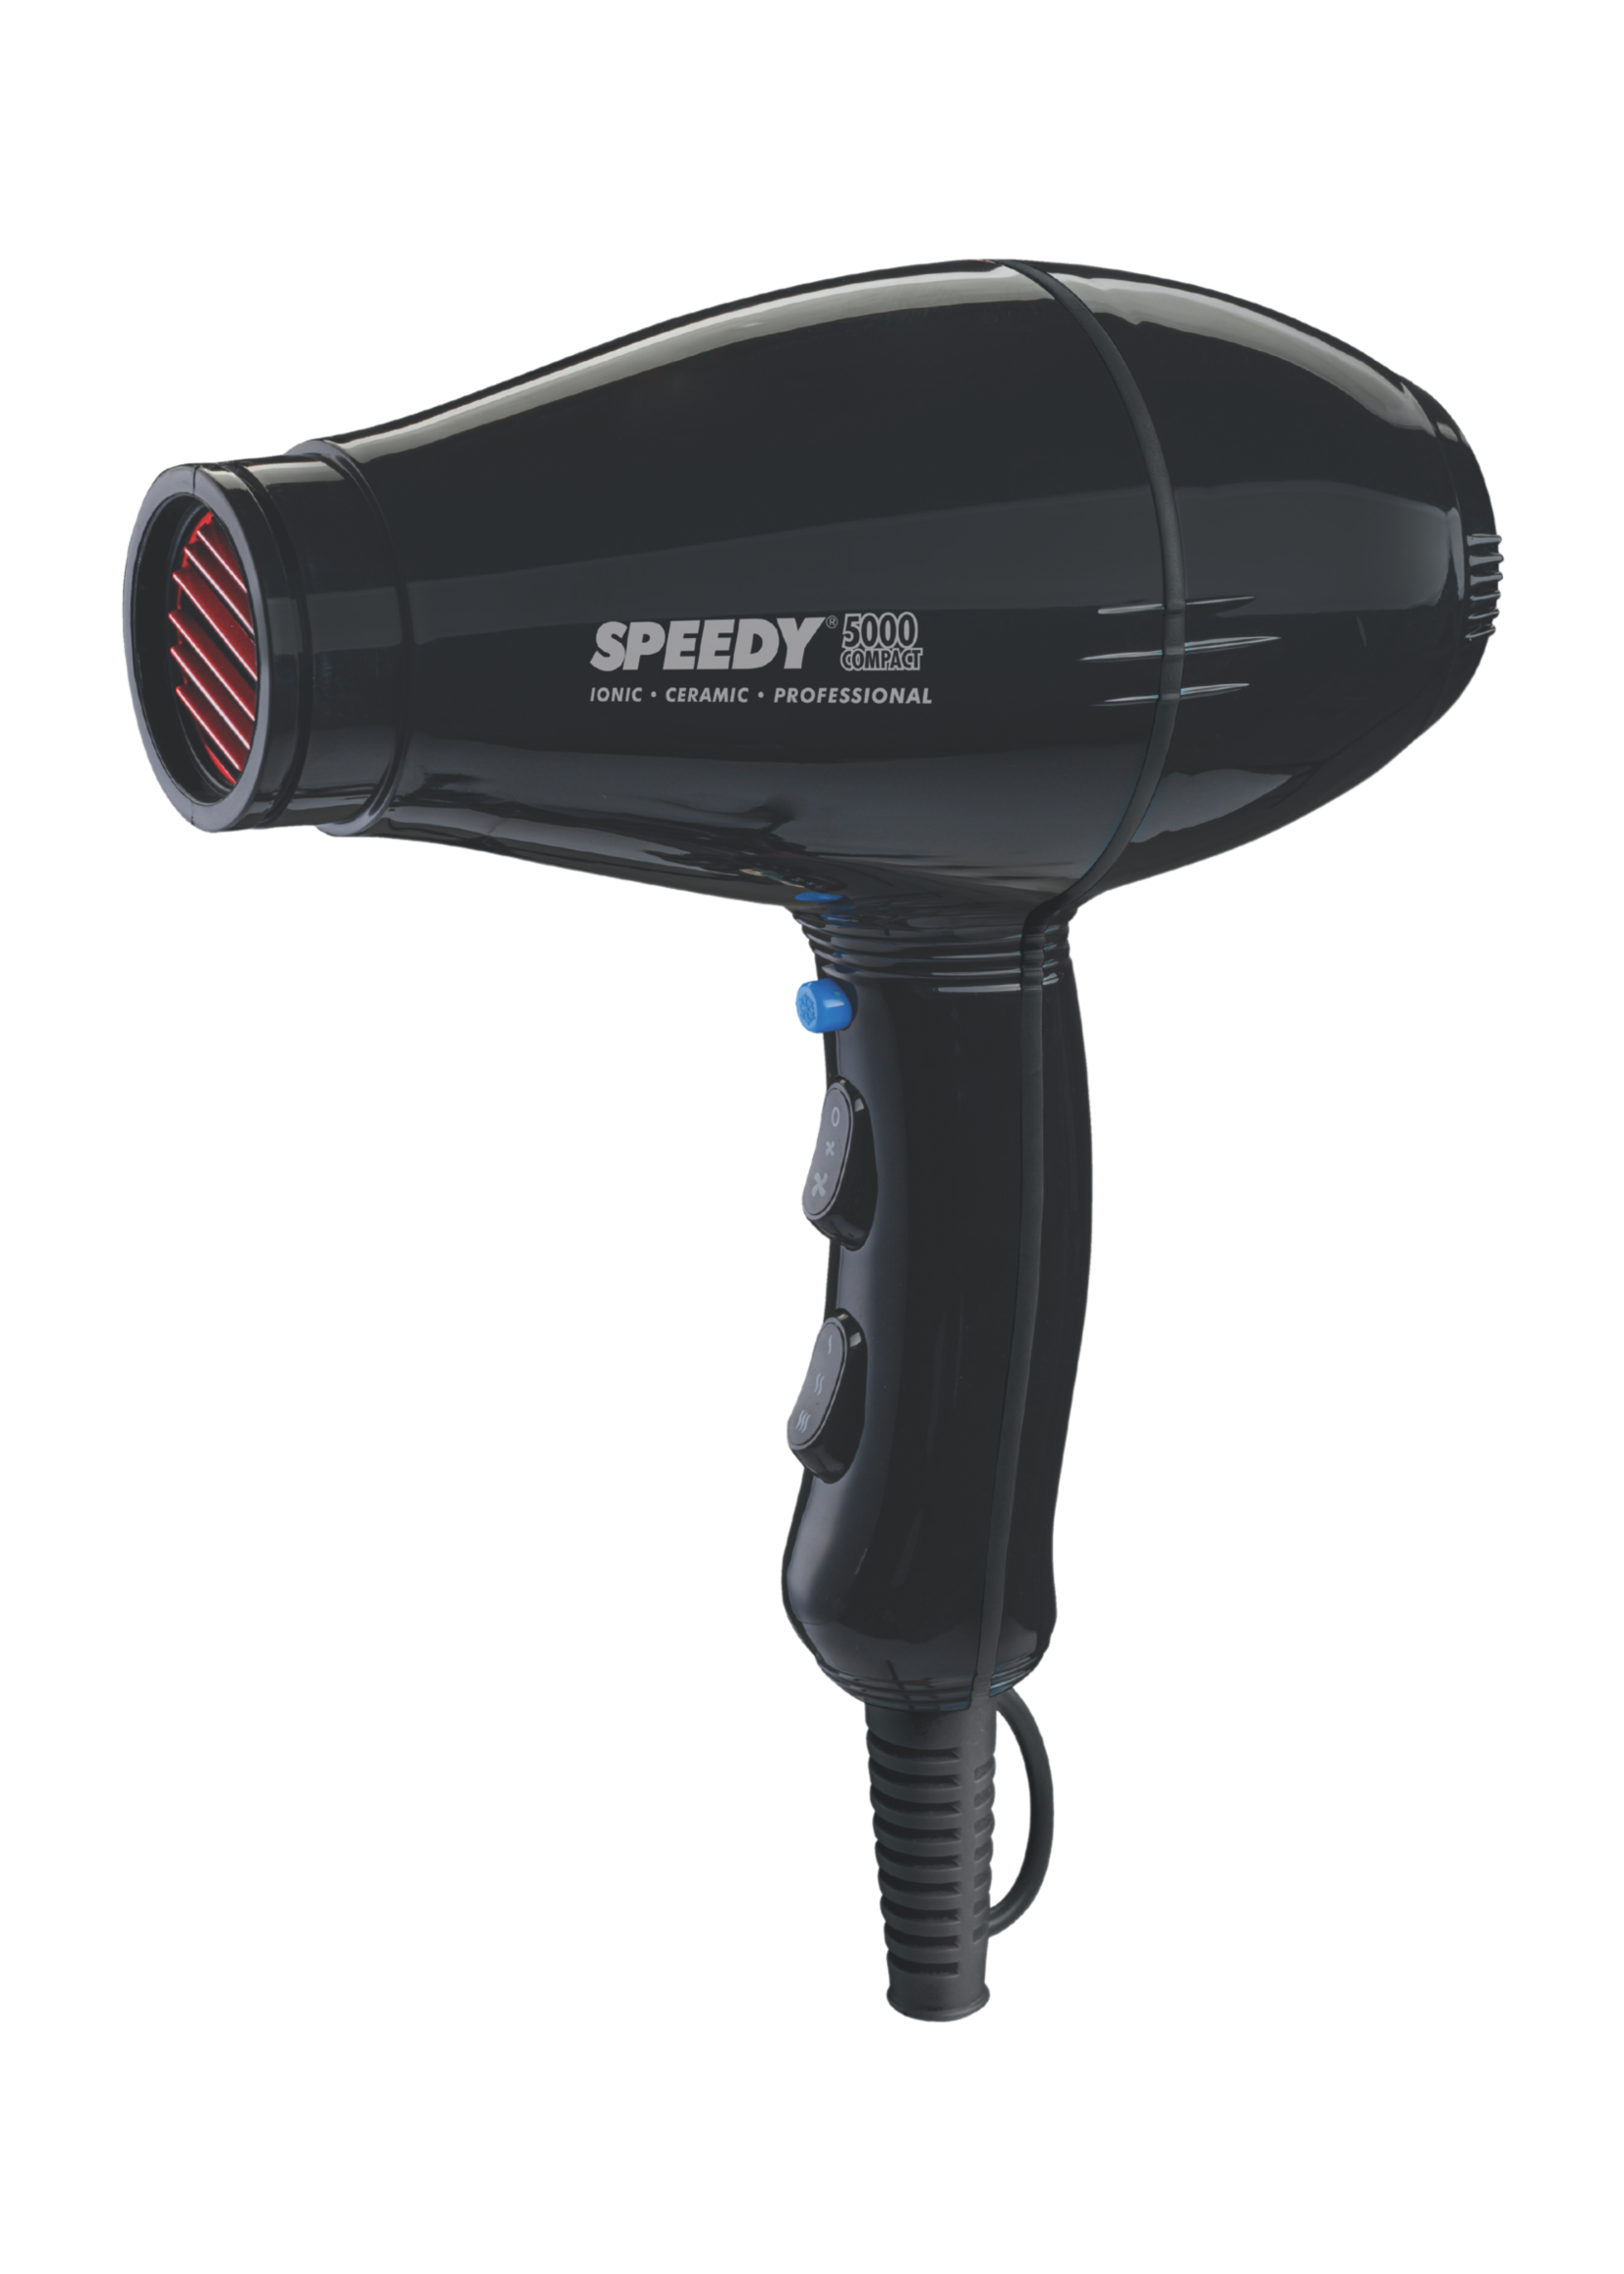 Speedy 5000 Compact Hair Dryer - Black